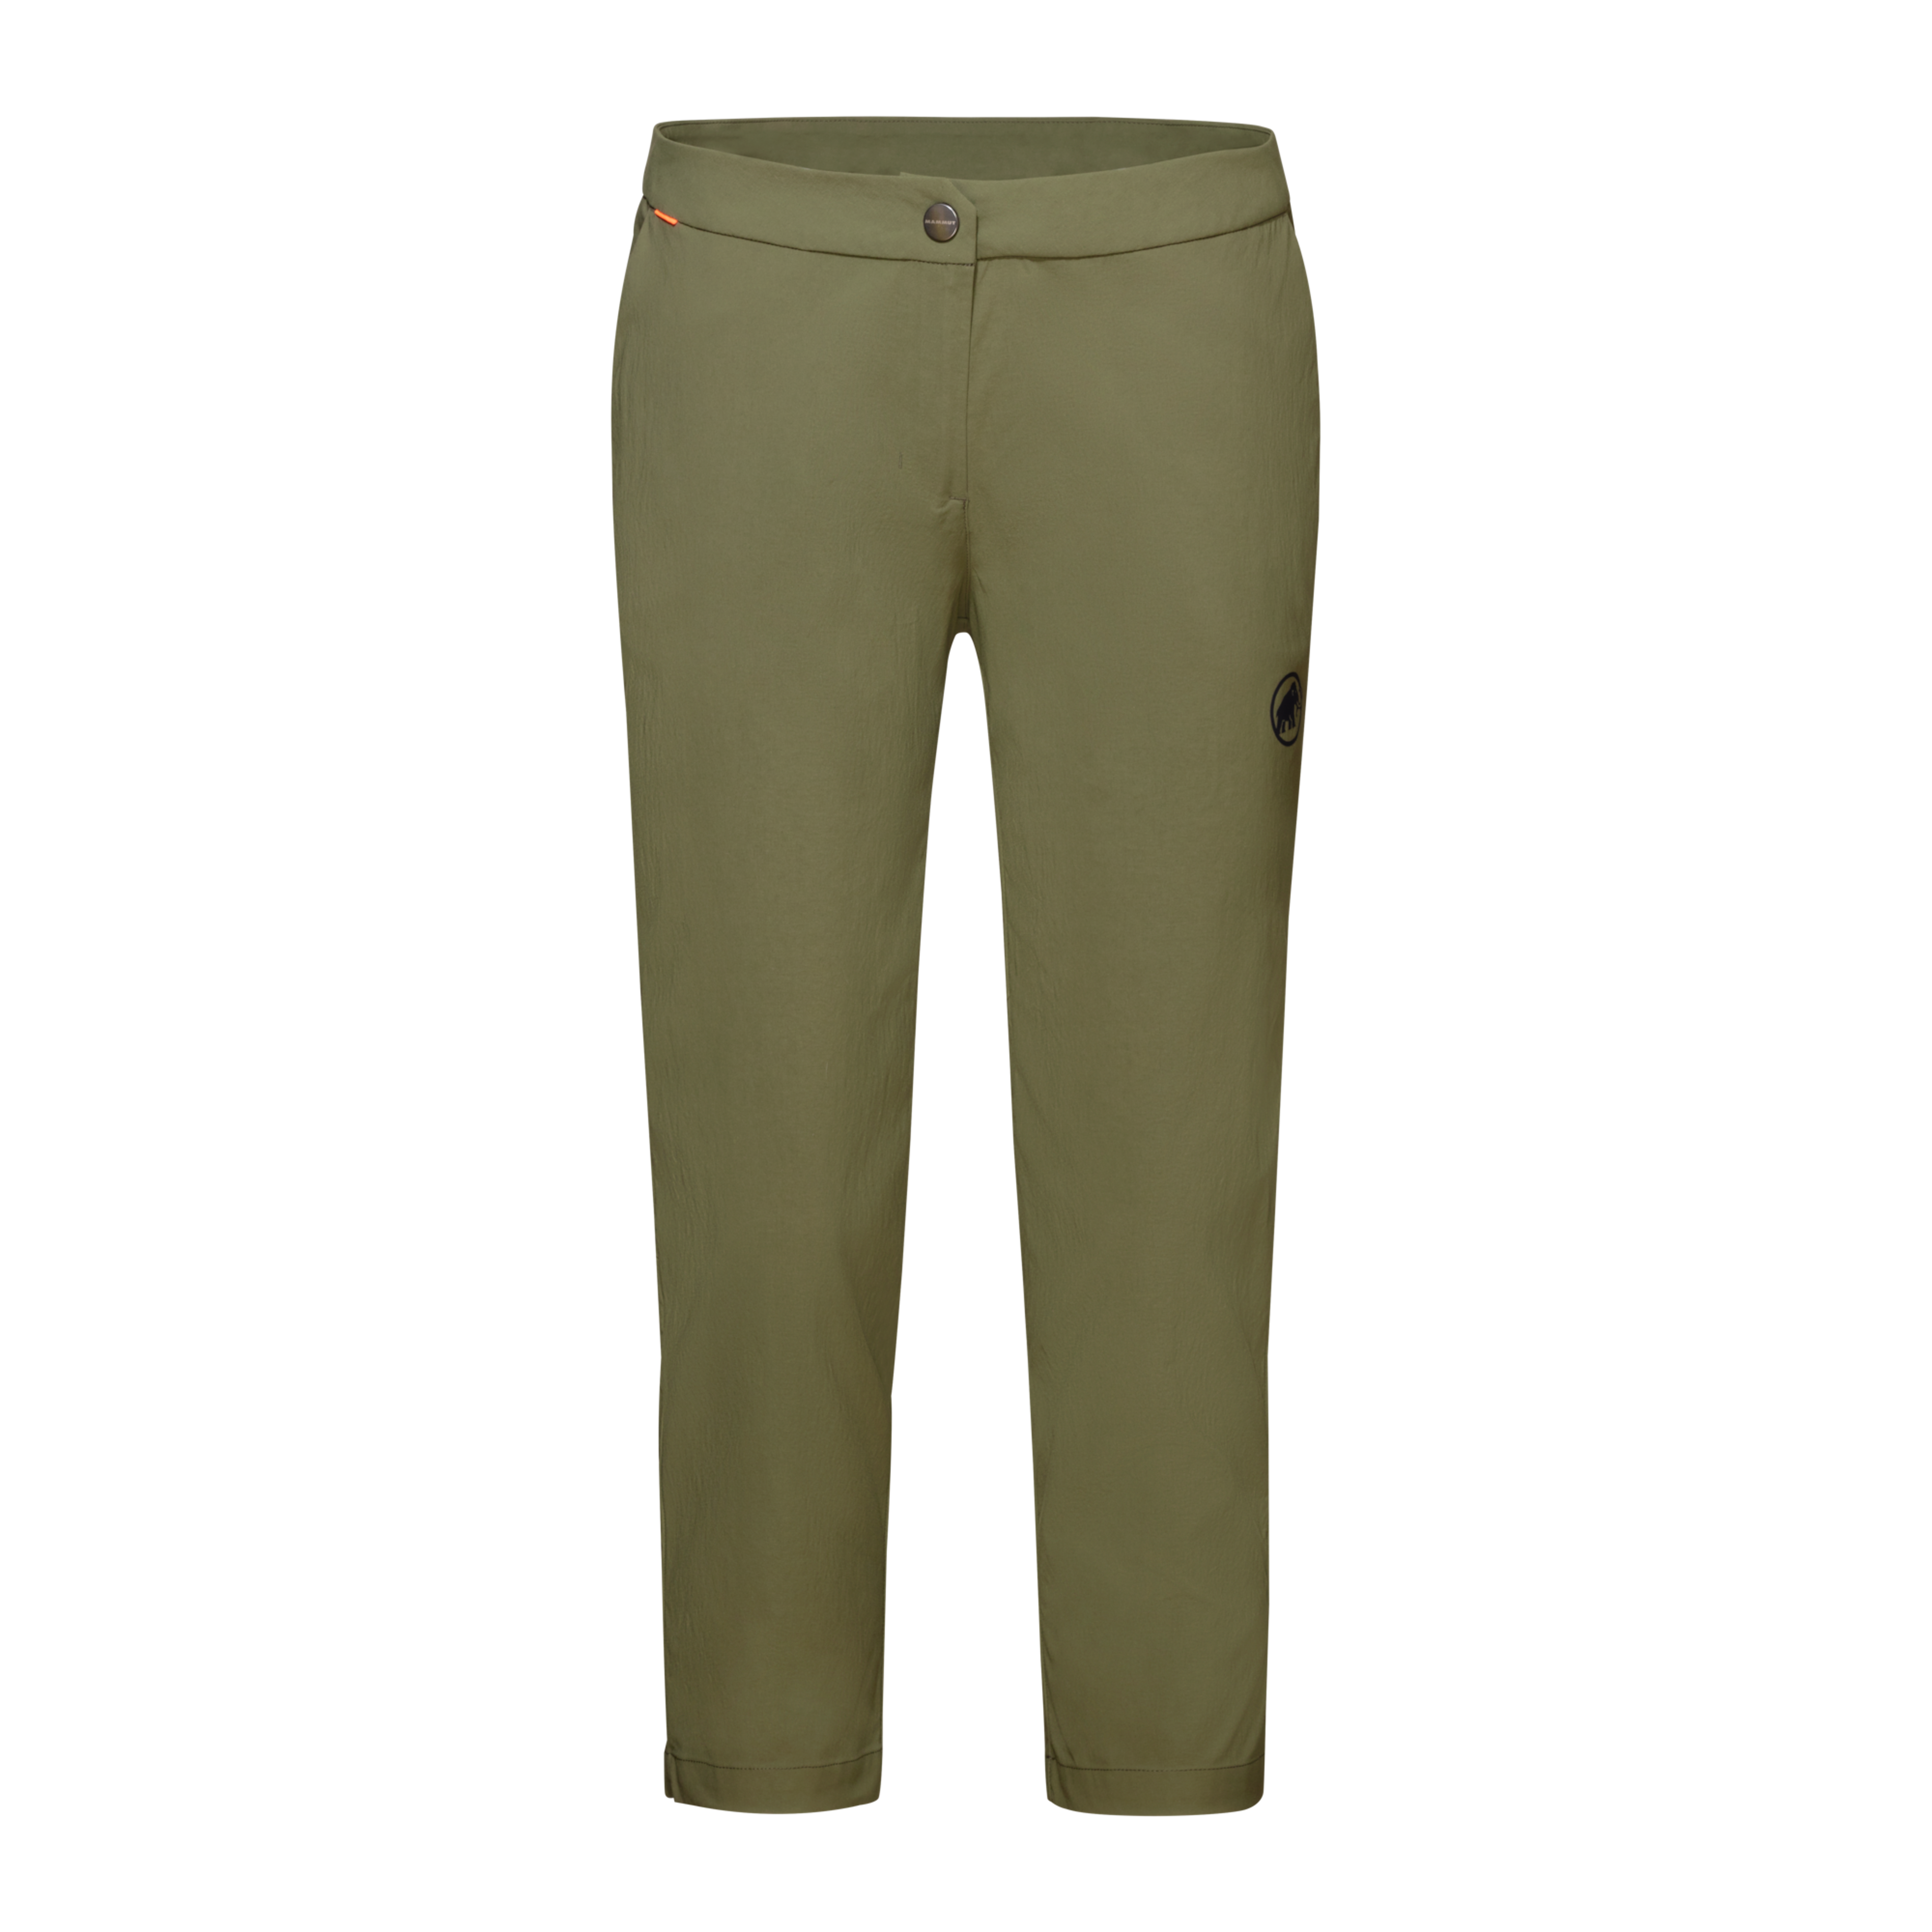 Mammut Hiking Pants - Walking trousers Women's, Product Review